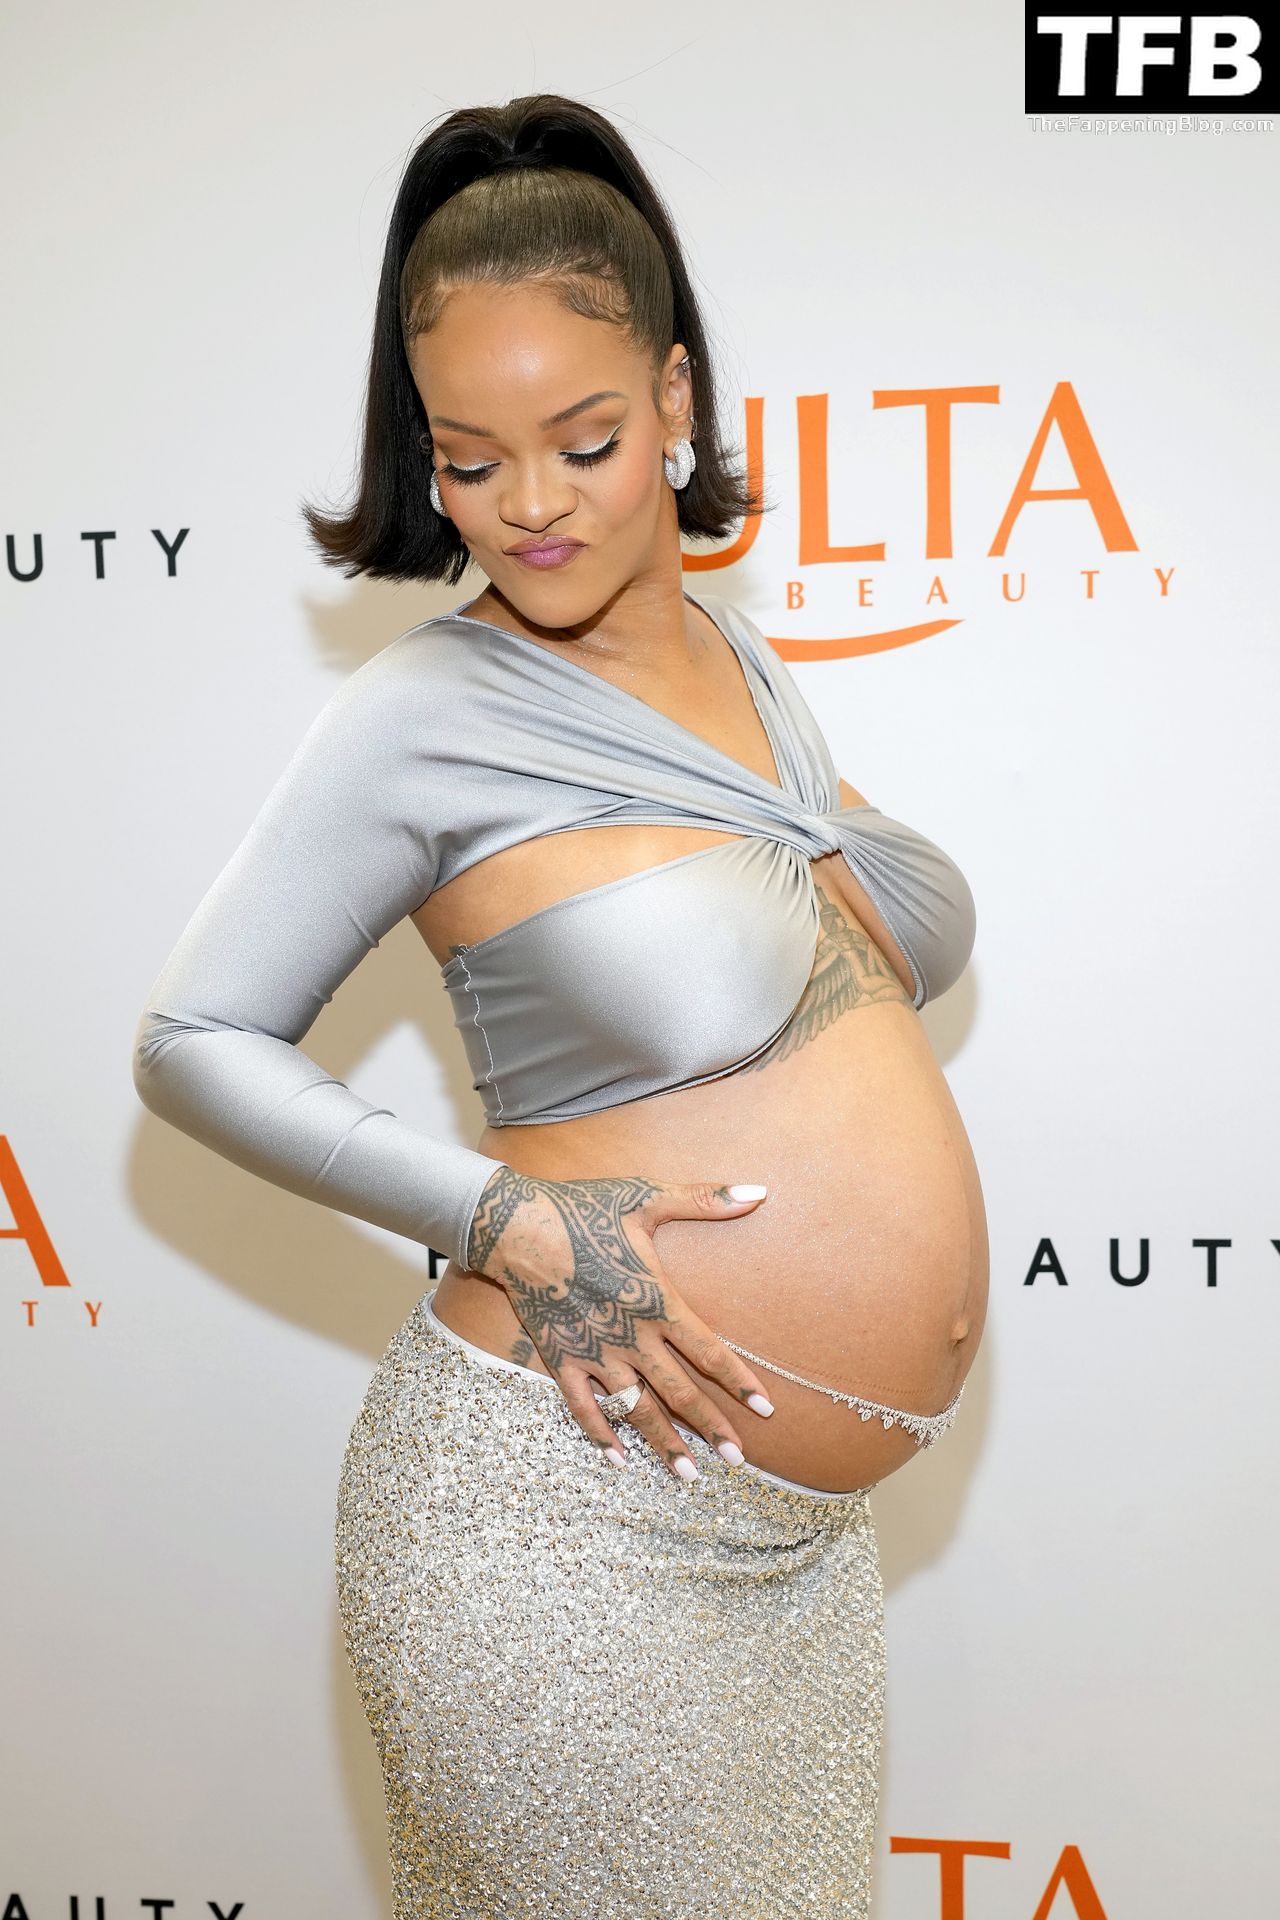 Rihanna-Sexy-The-Fappening-Blog-20-4.jpg